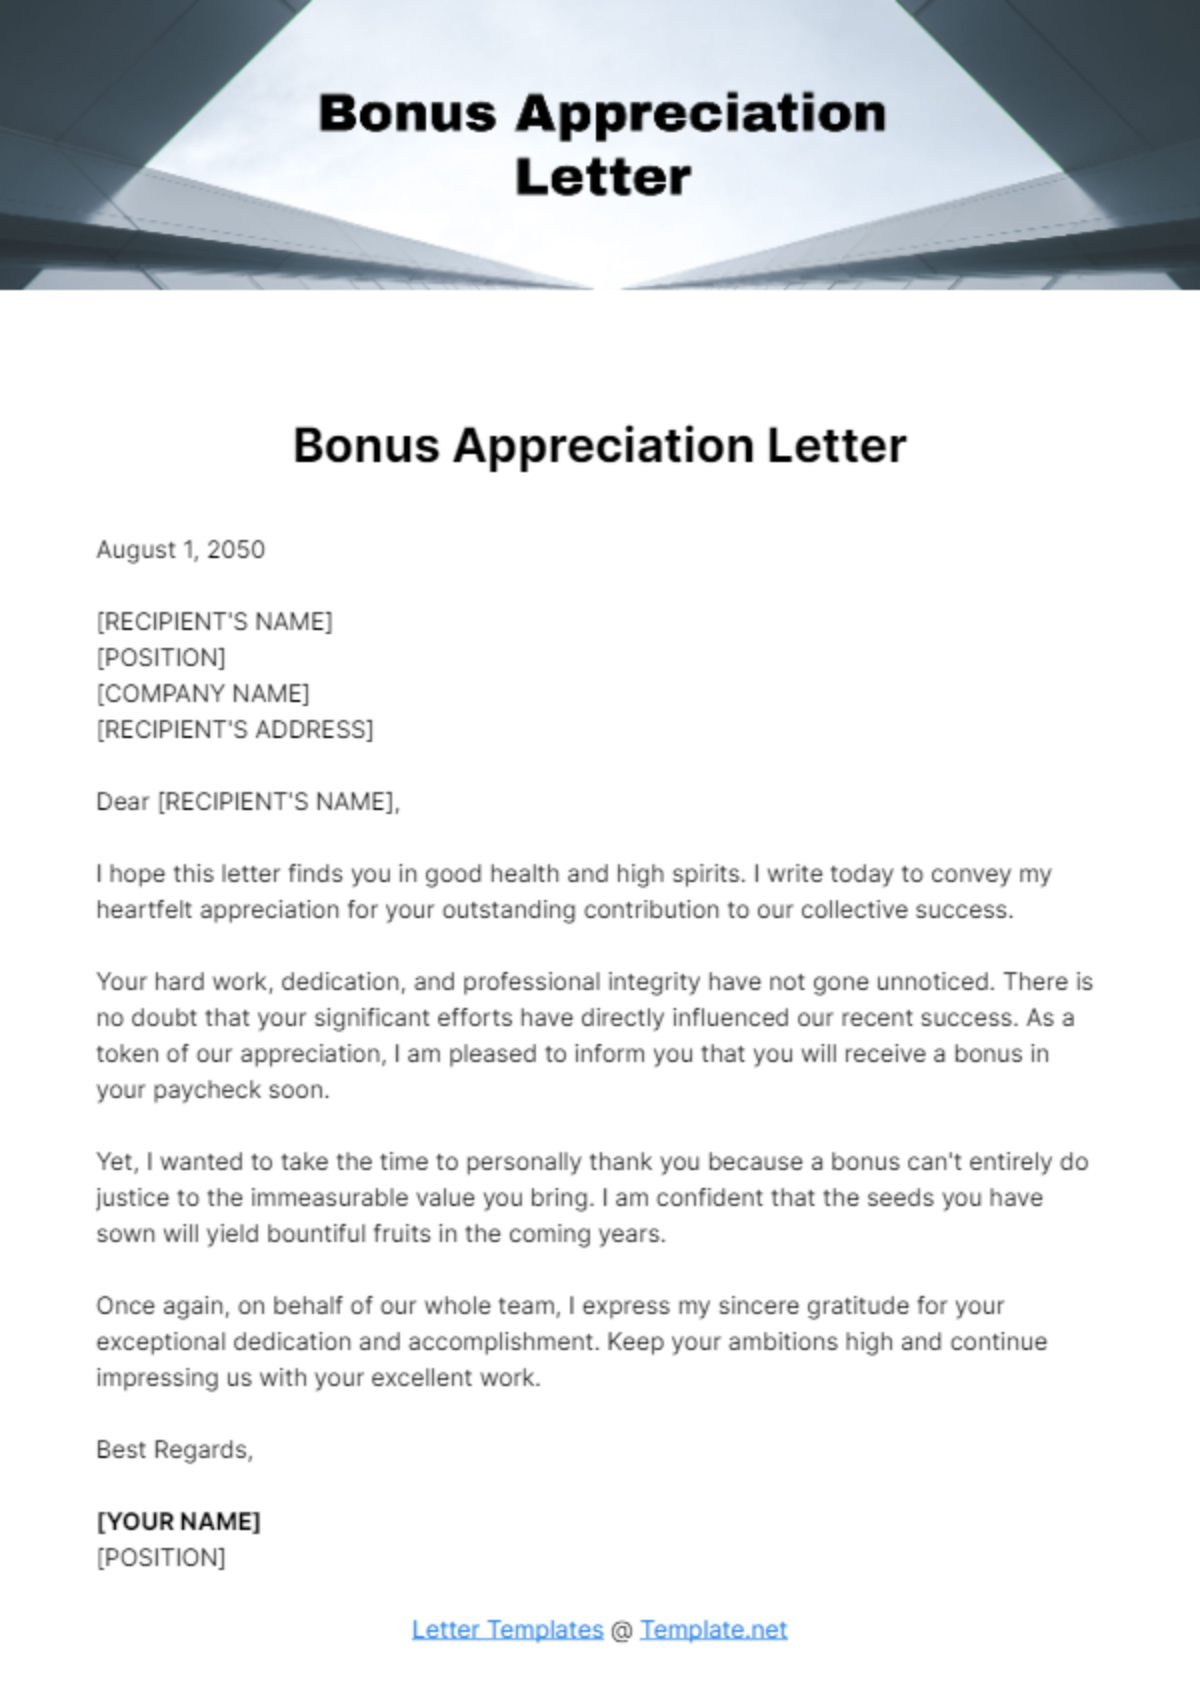 Free Bonus Appreciation Letter Template